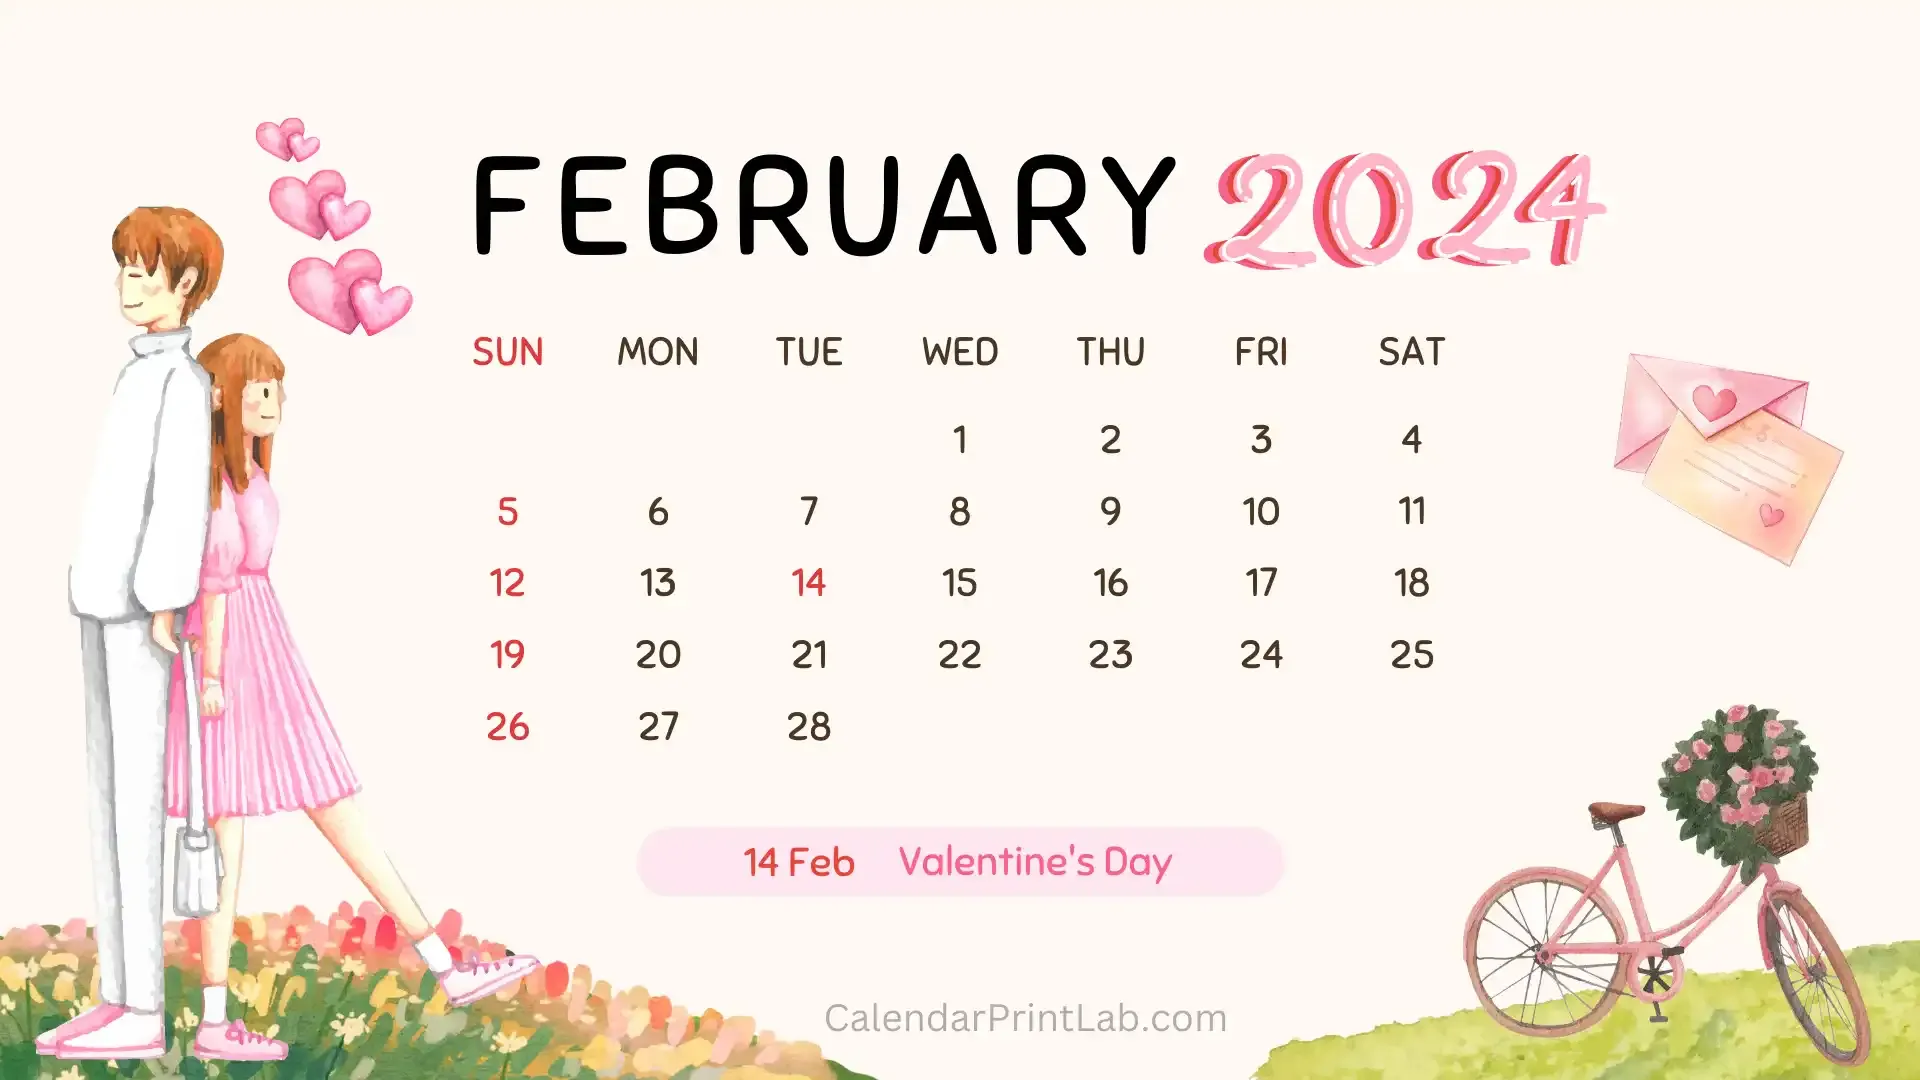 Romantic February 2024 Calendar Wallpaper